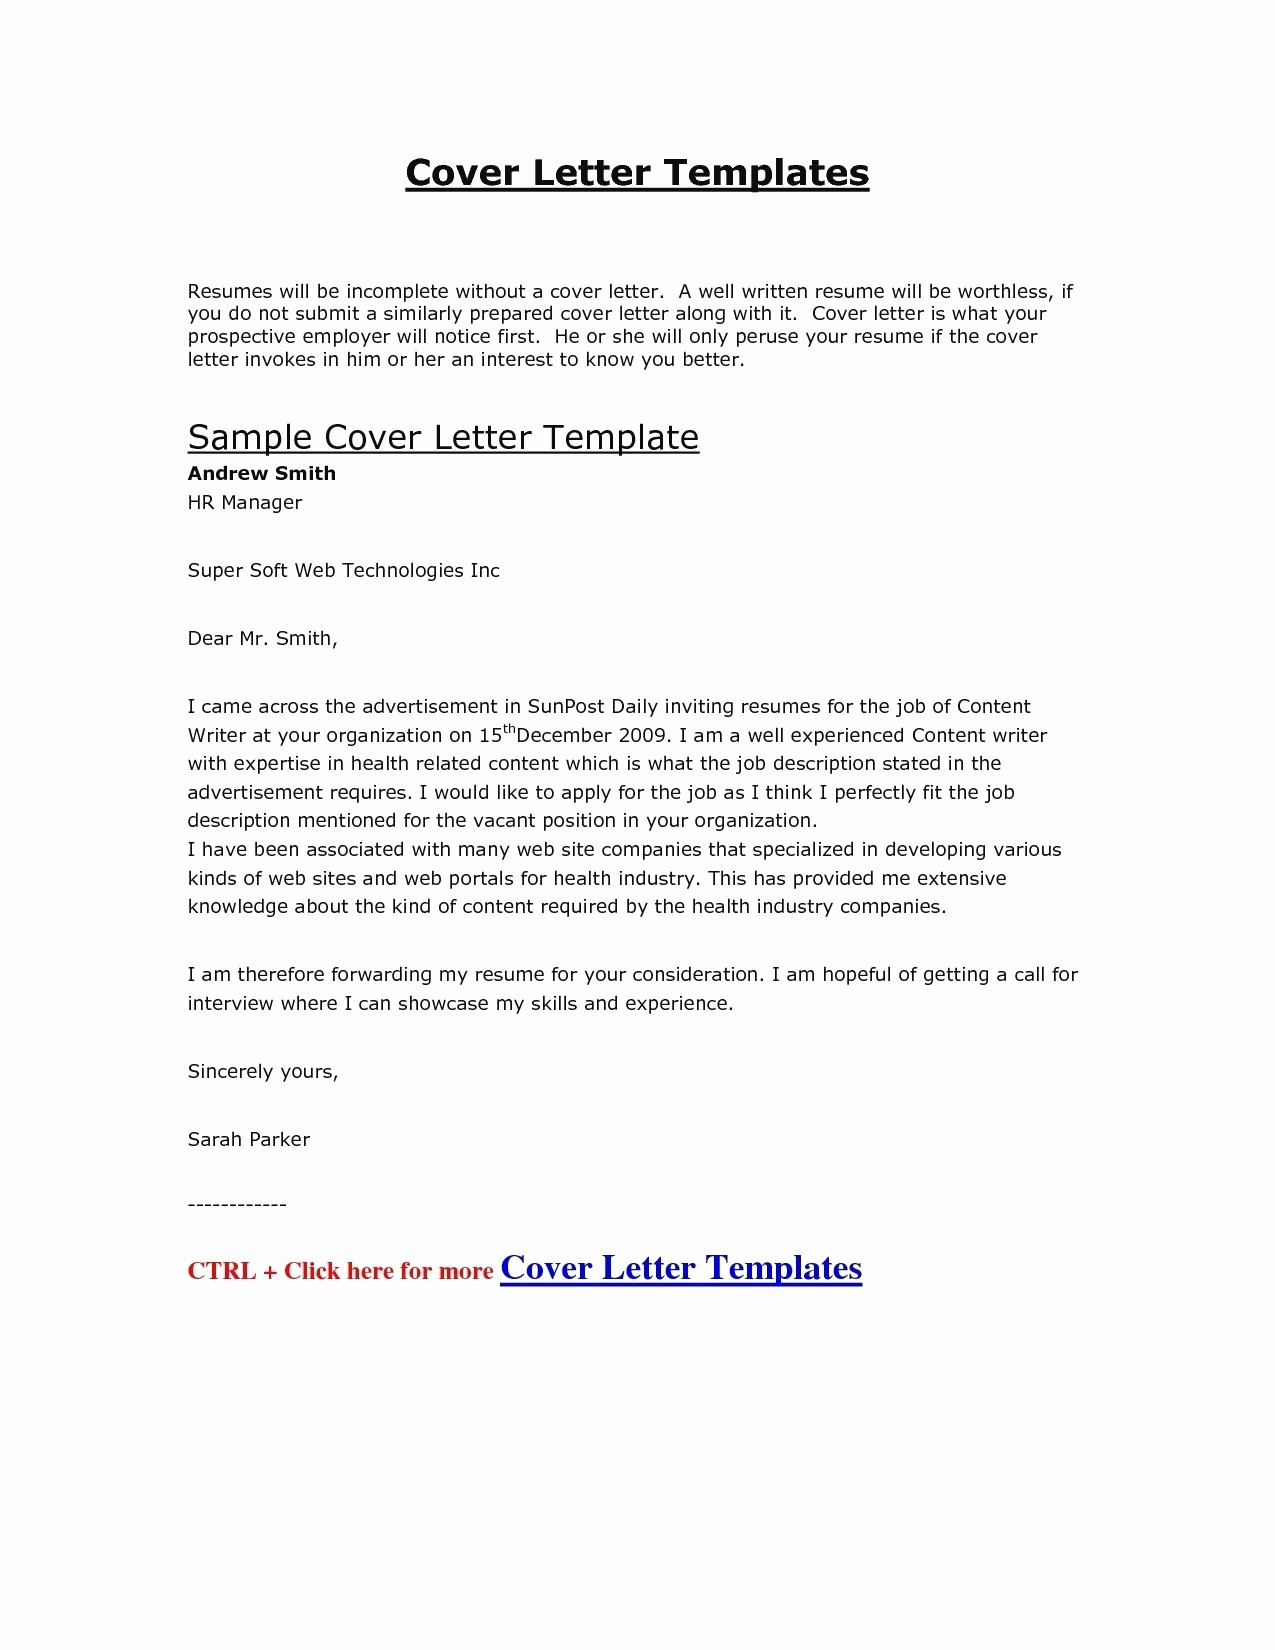 Dear Seller Letter Template - Job Application Letter format Template Copy Cover Letter Template Hr